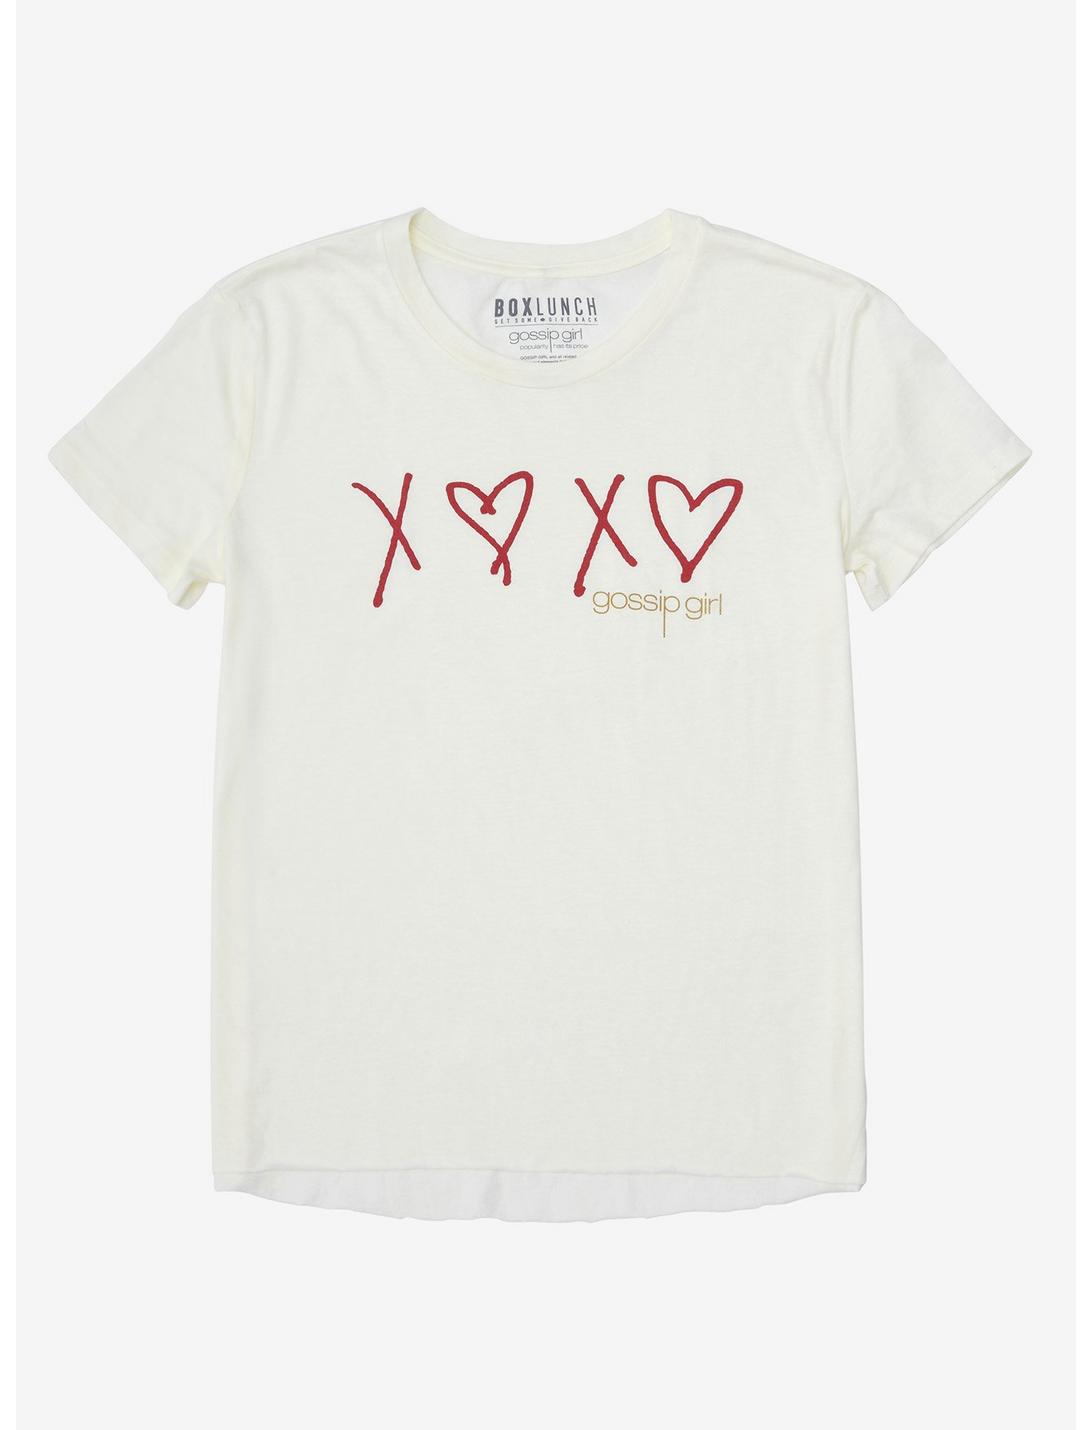 Gossip Girl XOXO T-Shirt - BoxLunch Exclusive, PINK, hi-res